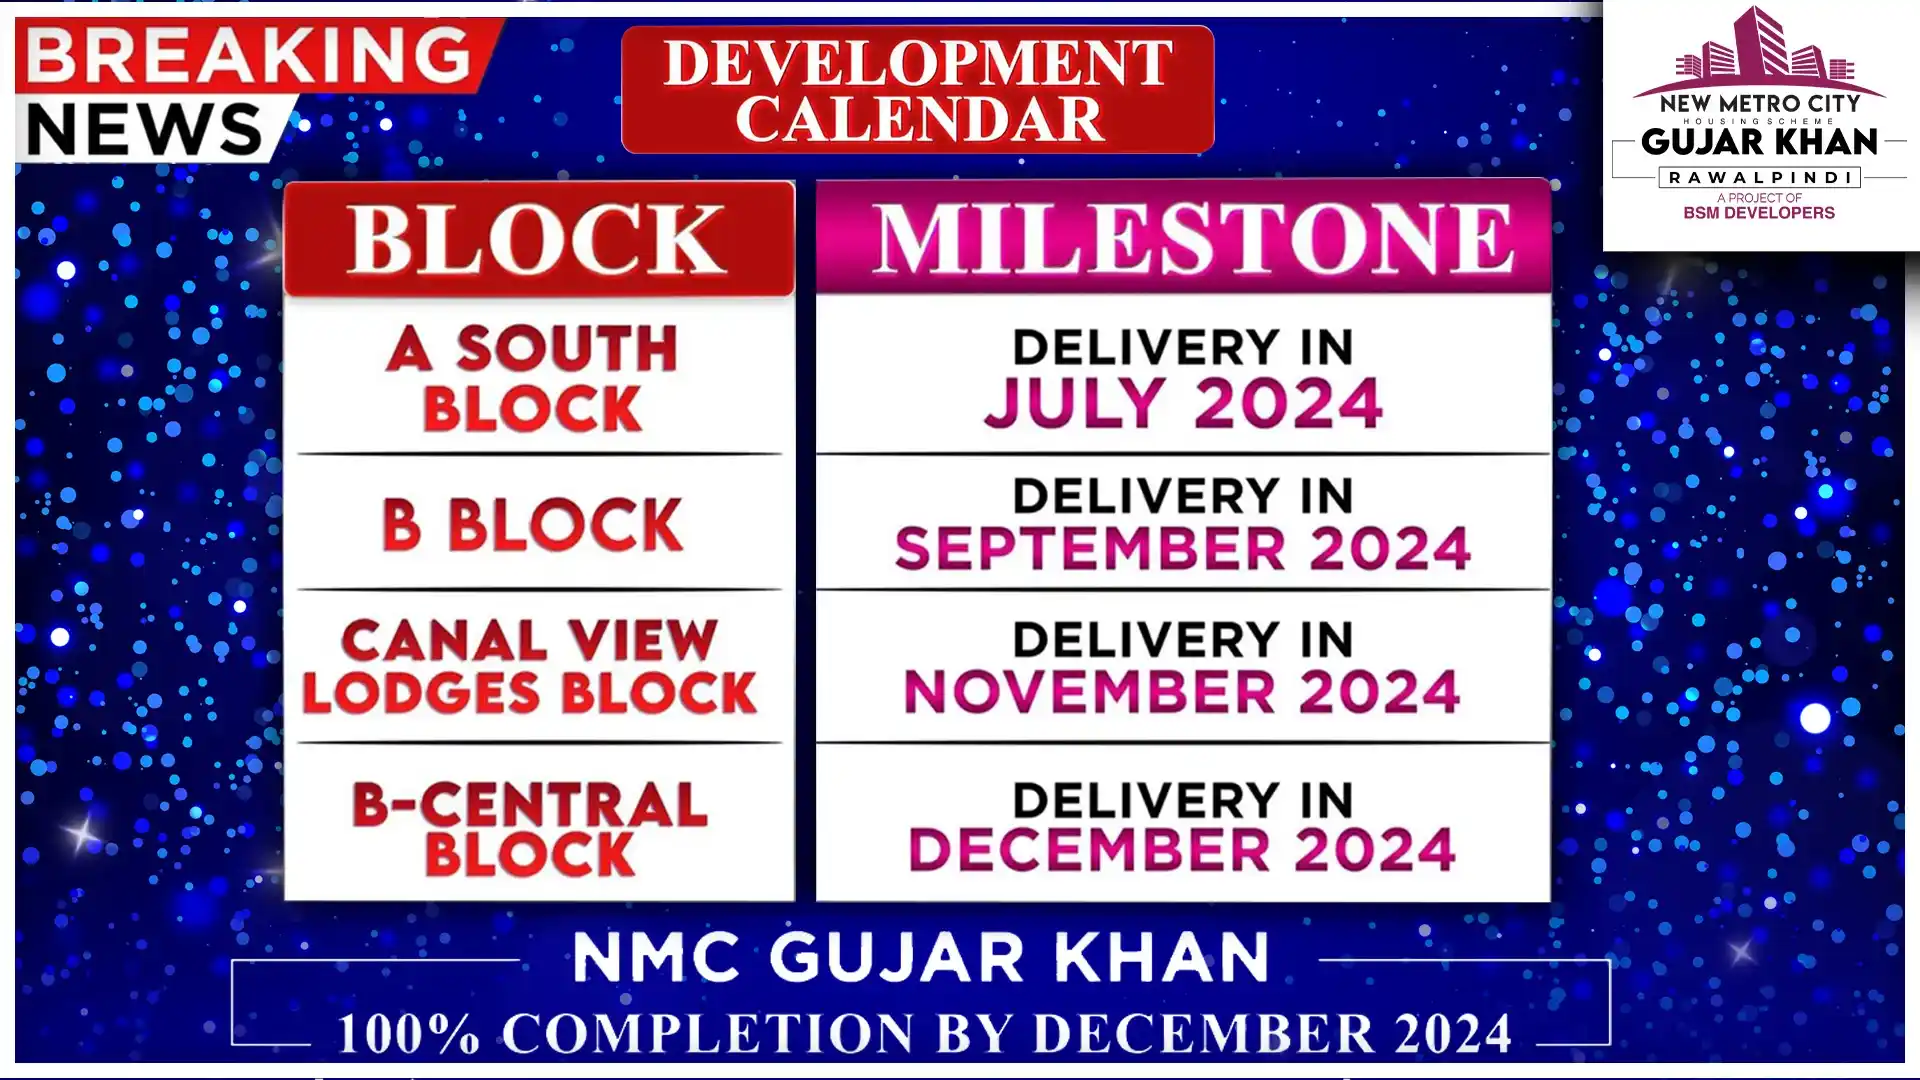 New Metro City Gujar Khan Development calender